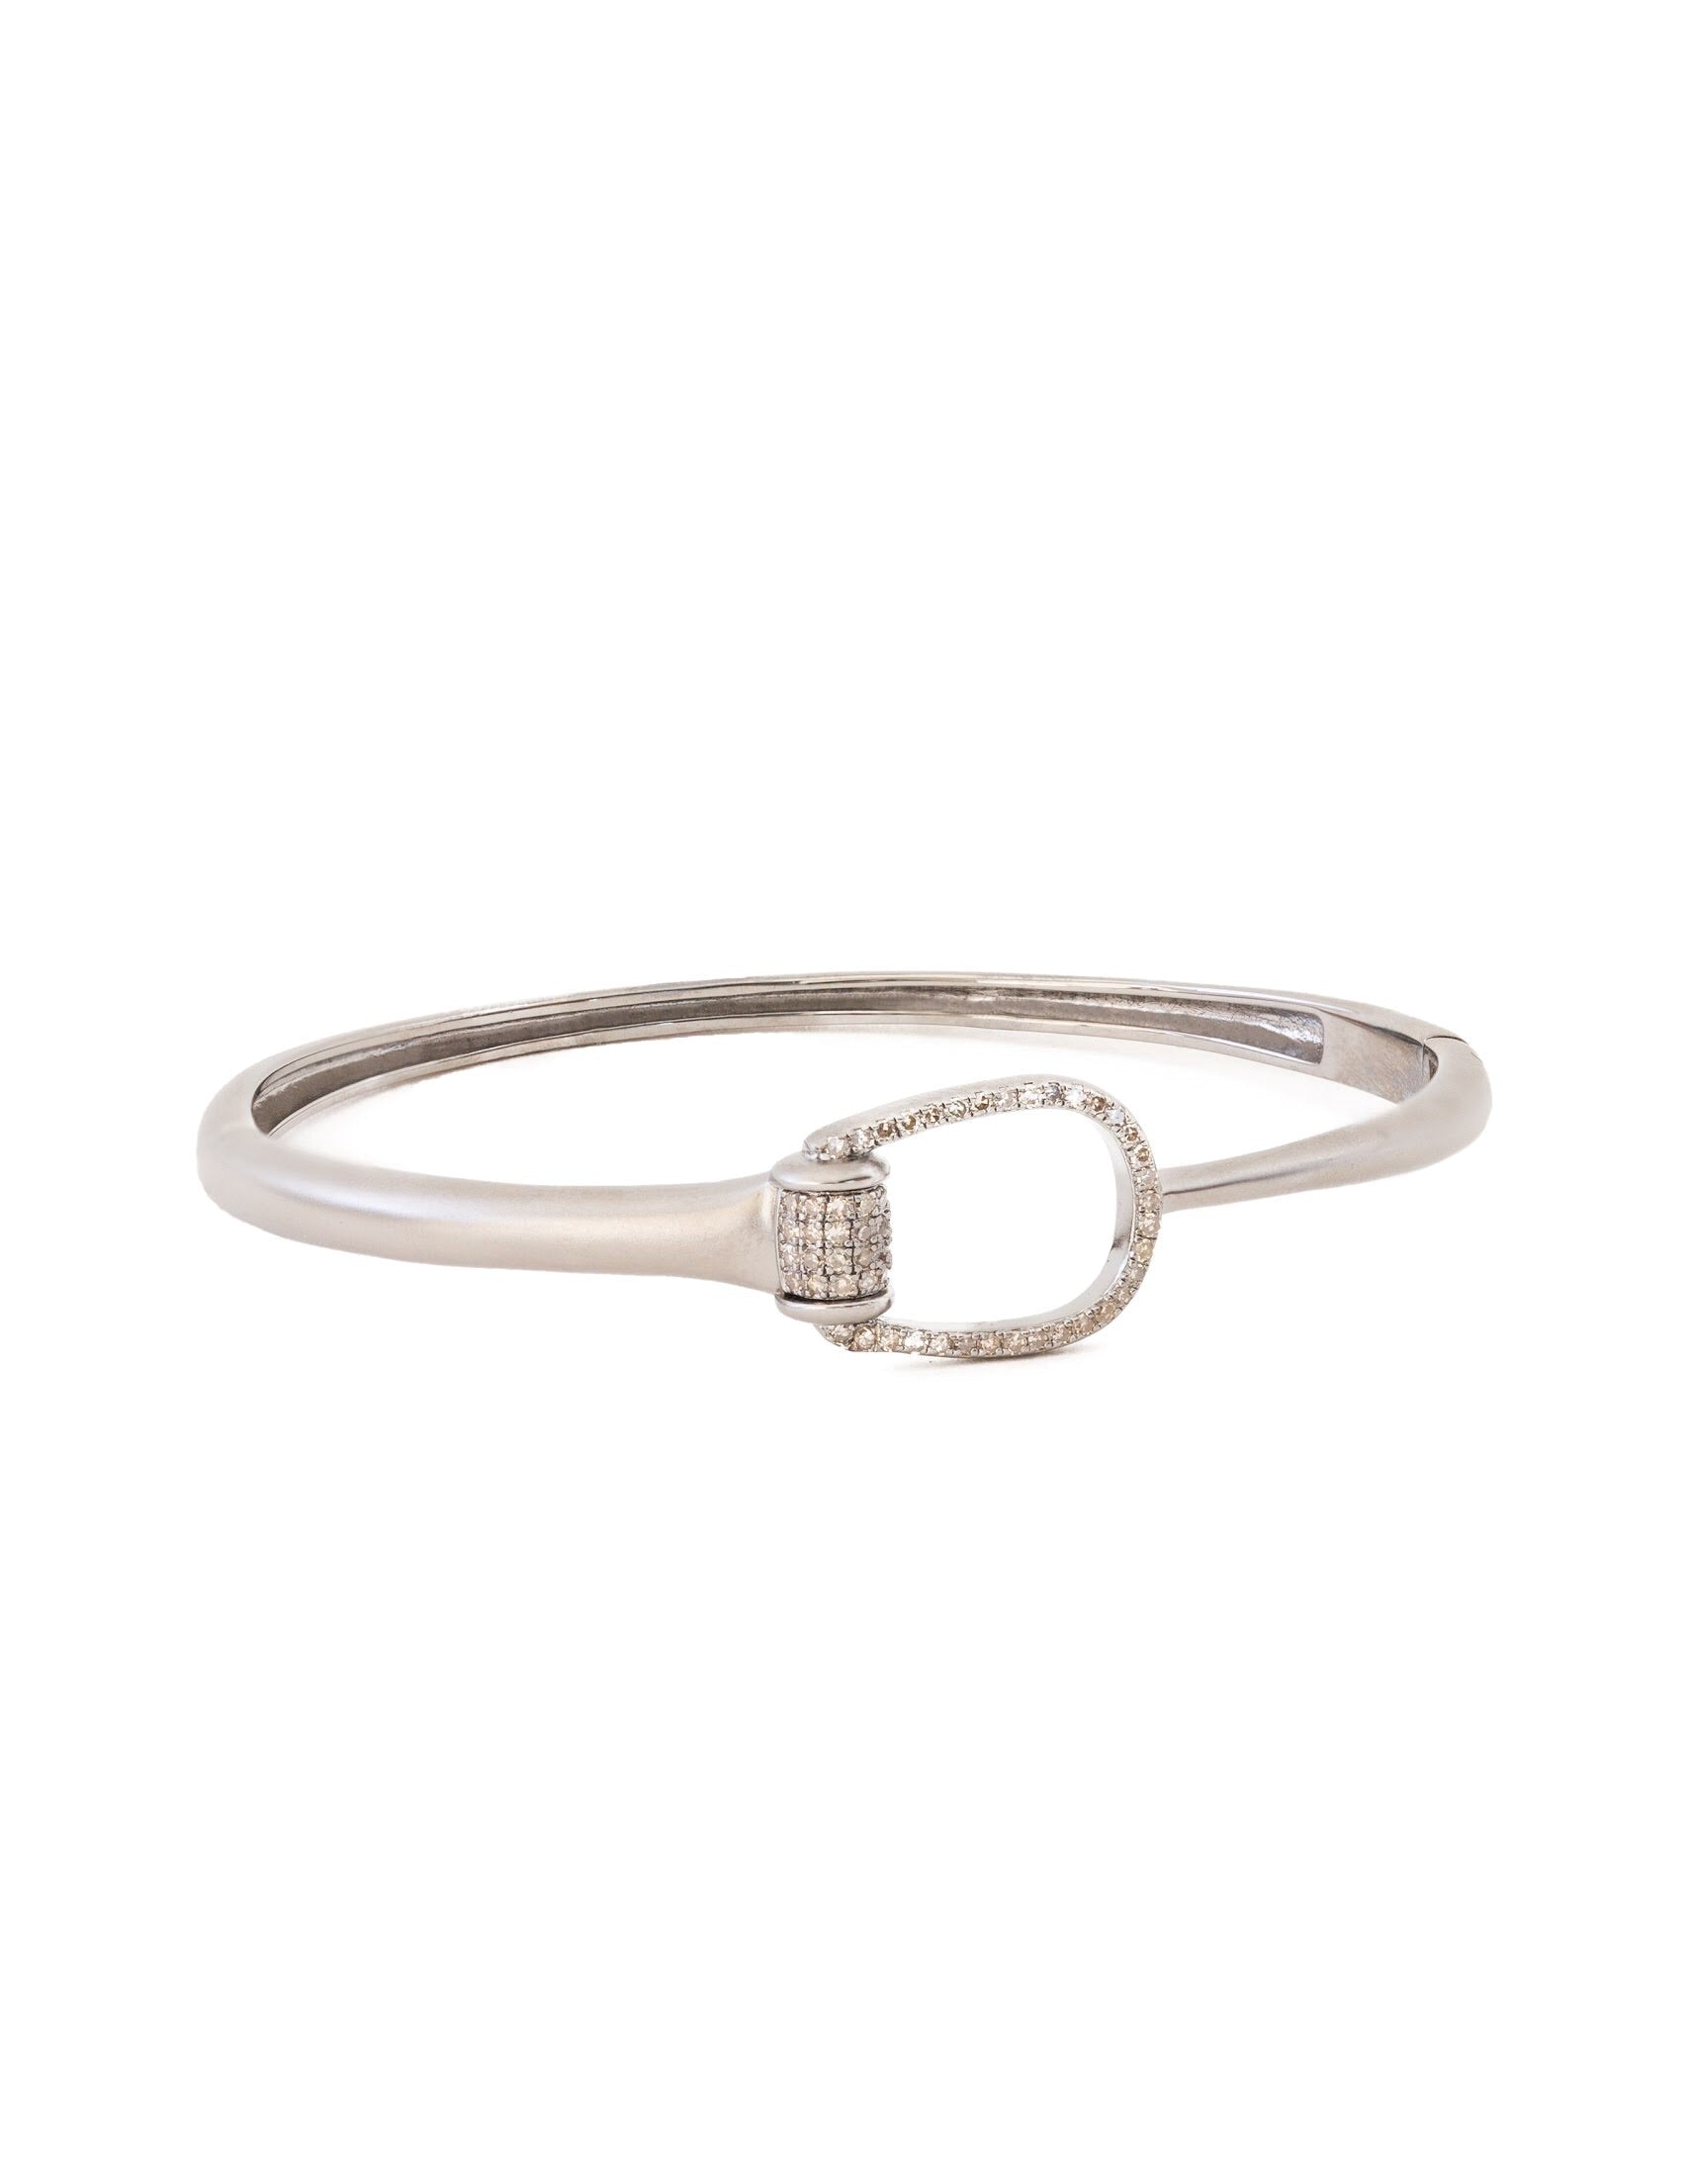 S. Row Designs Stirrup Bracelet